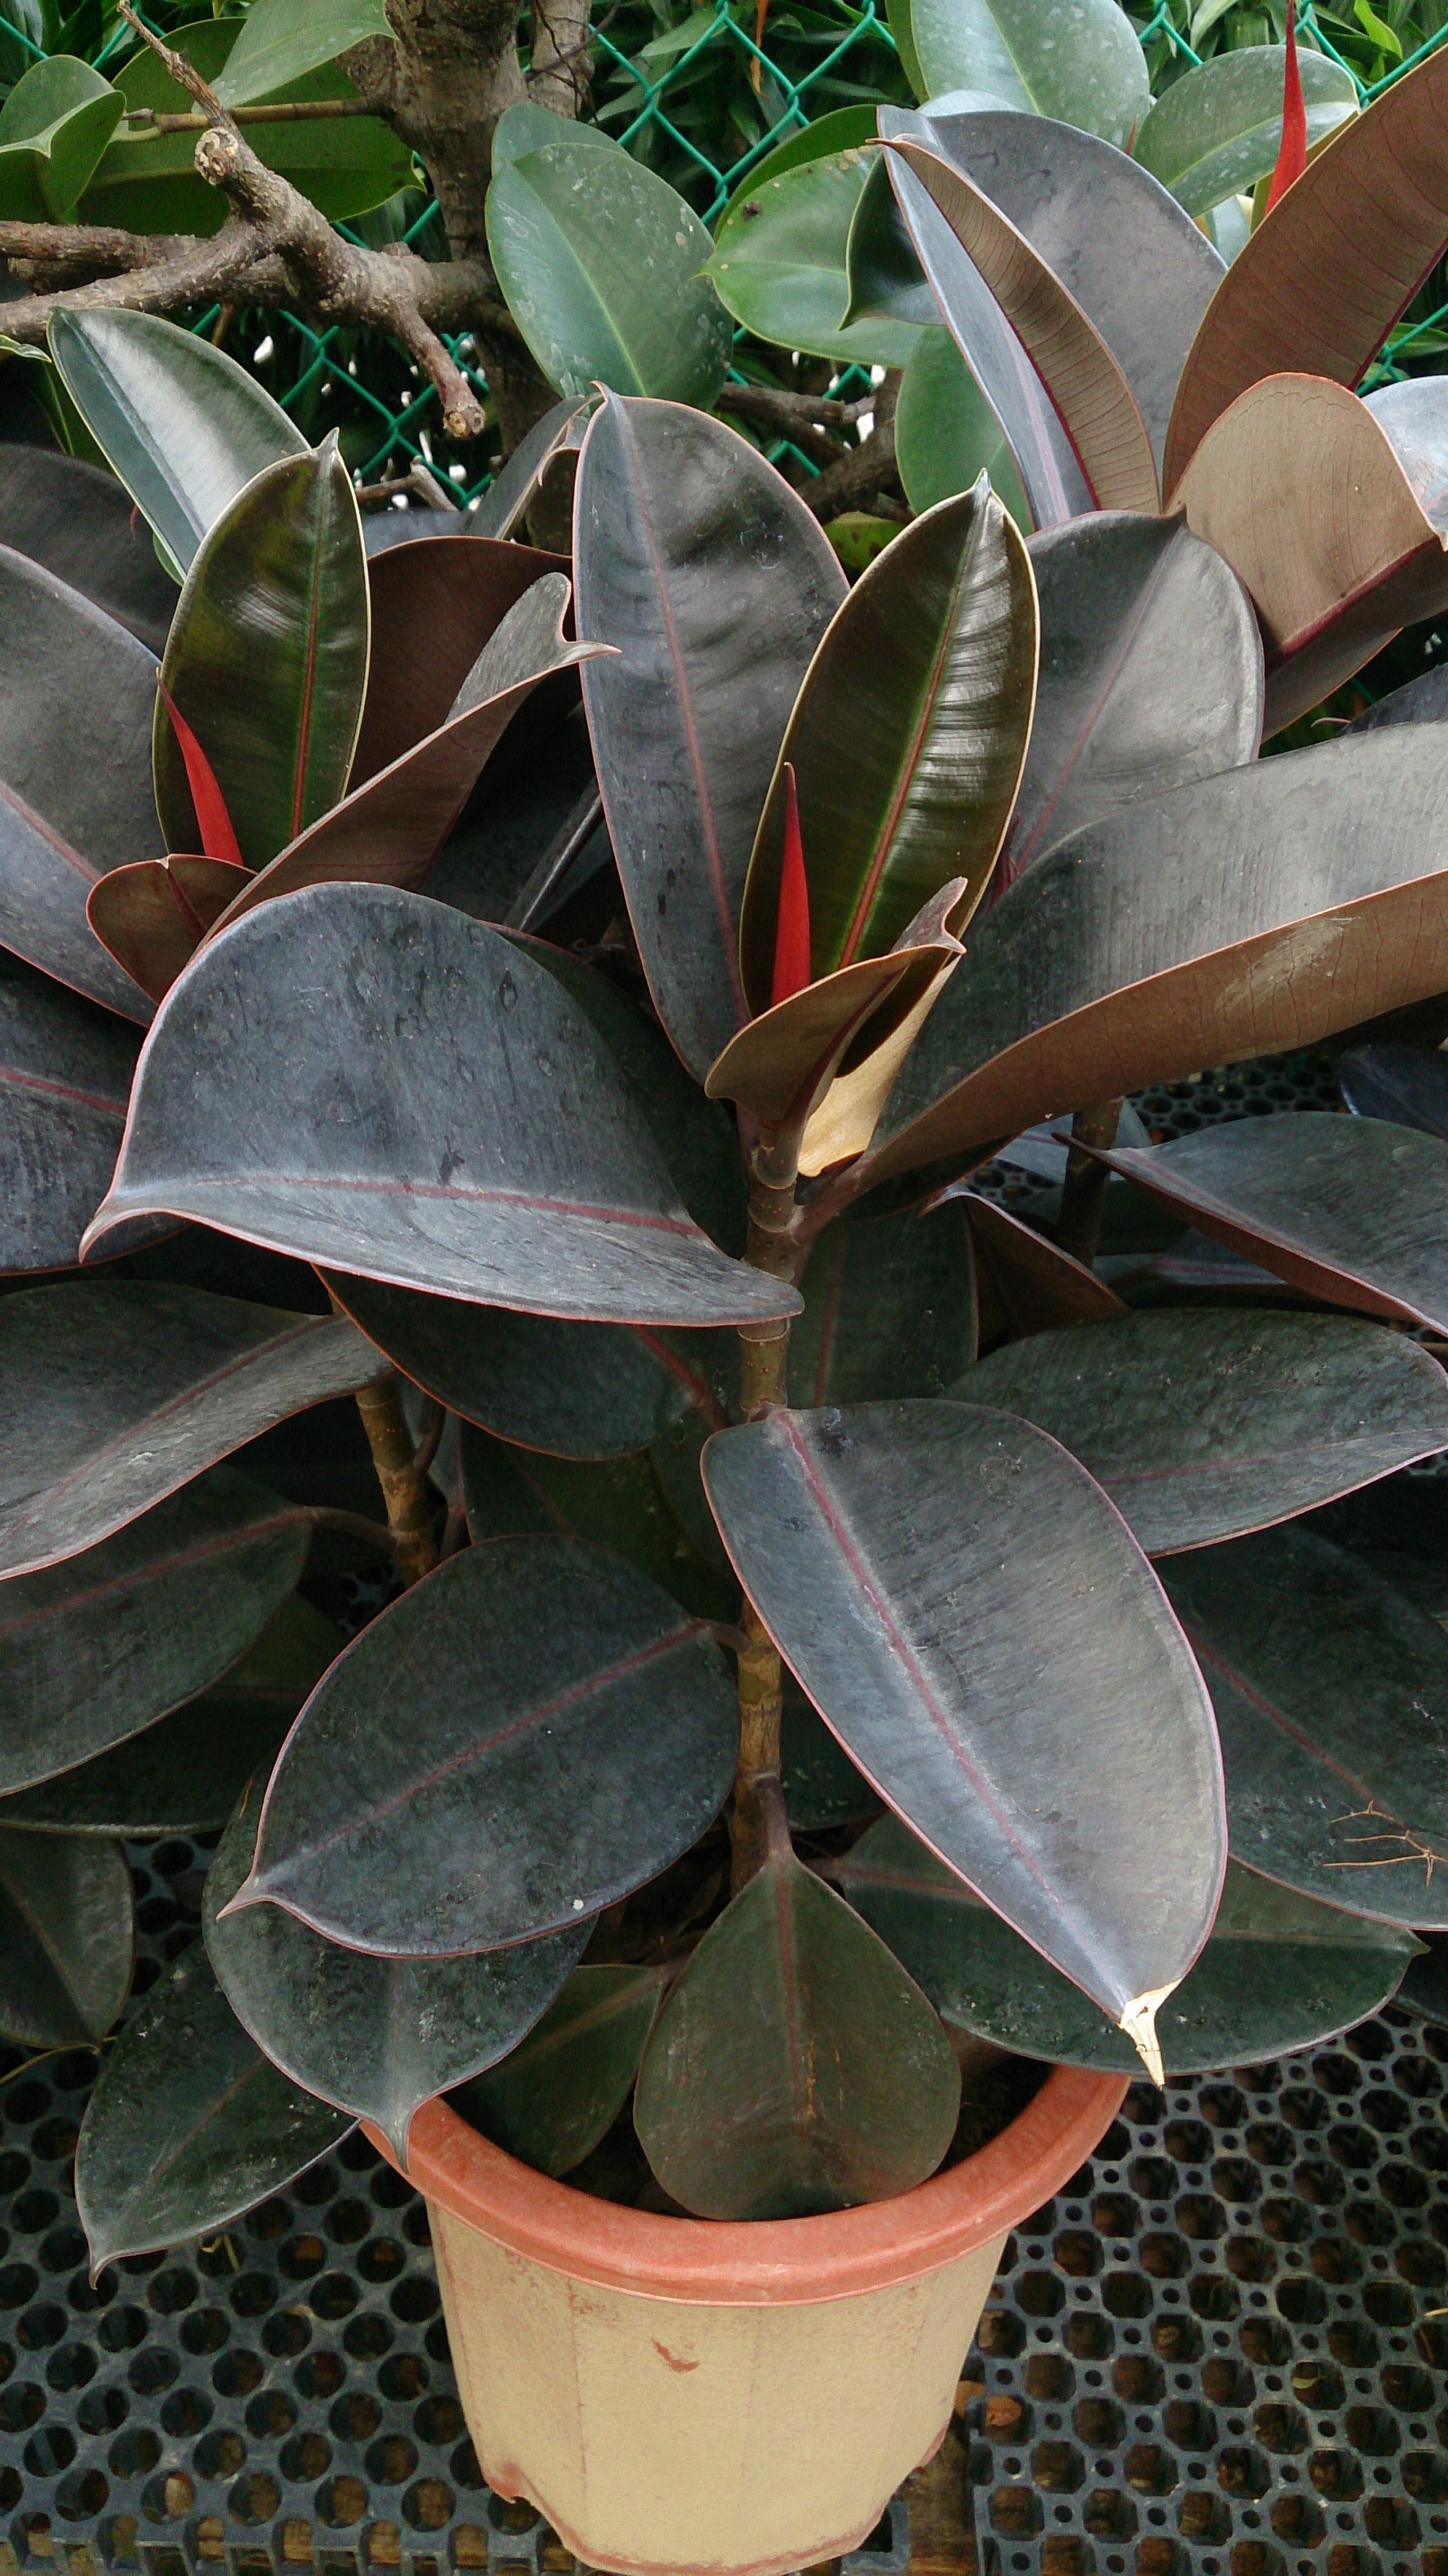 file:rubber plant (ficus elastica 'robusta') - wikimedia commons